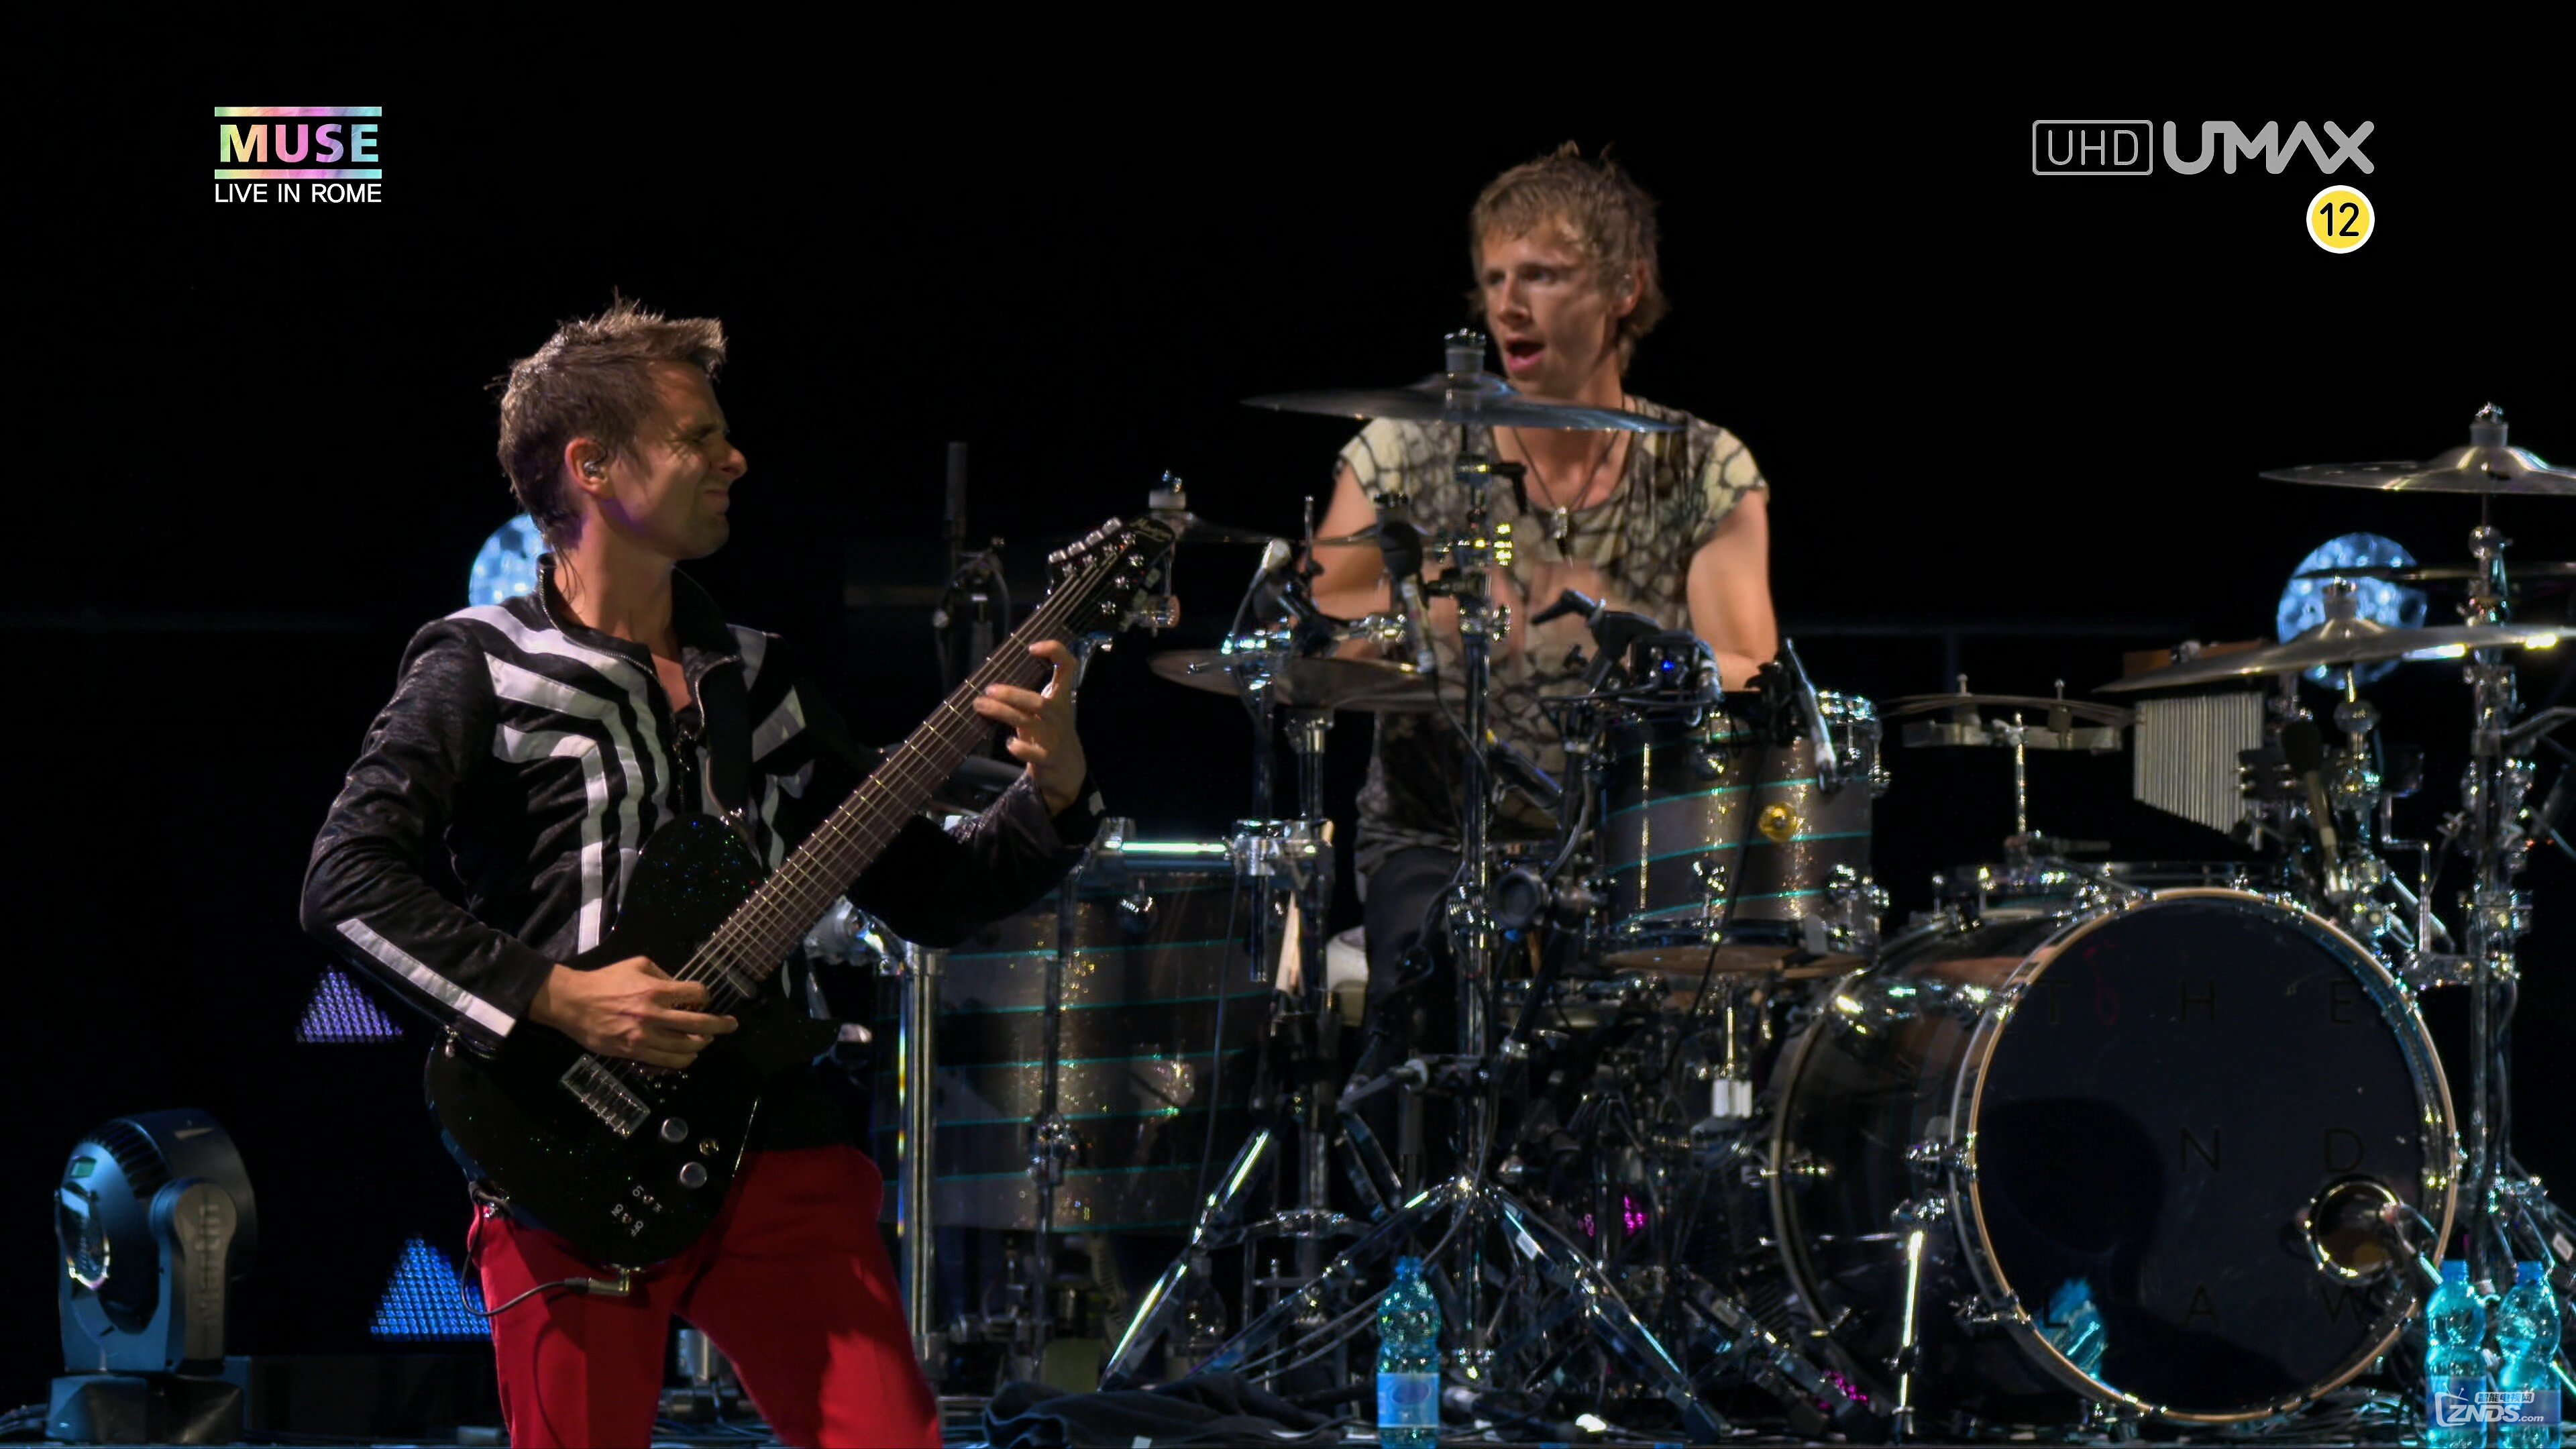 Muse.Live.At.Rome.Olympic.Stadium.2013.2160p.UHDTV.HEVC.mkv_20160313_000449.453.jpg